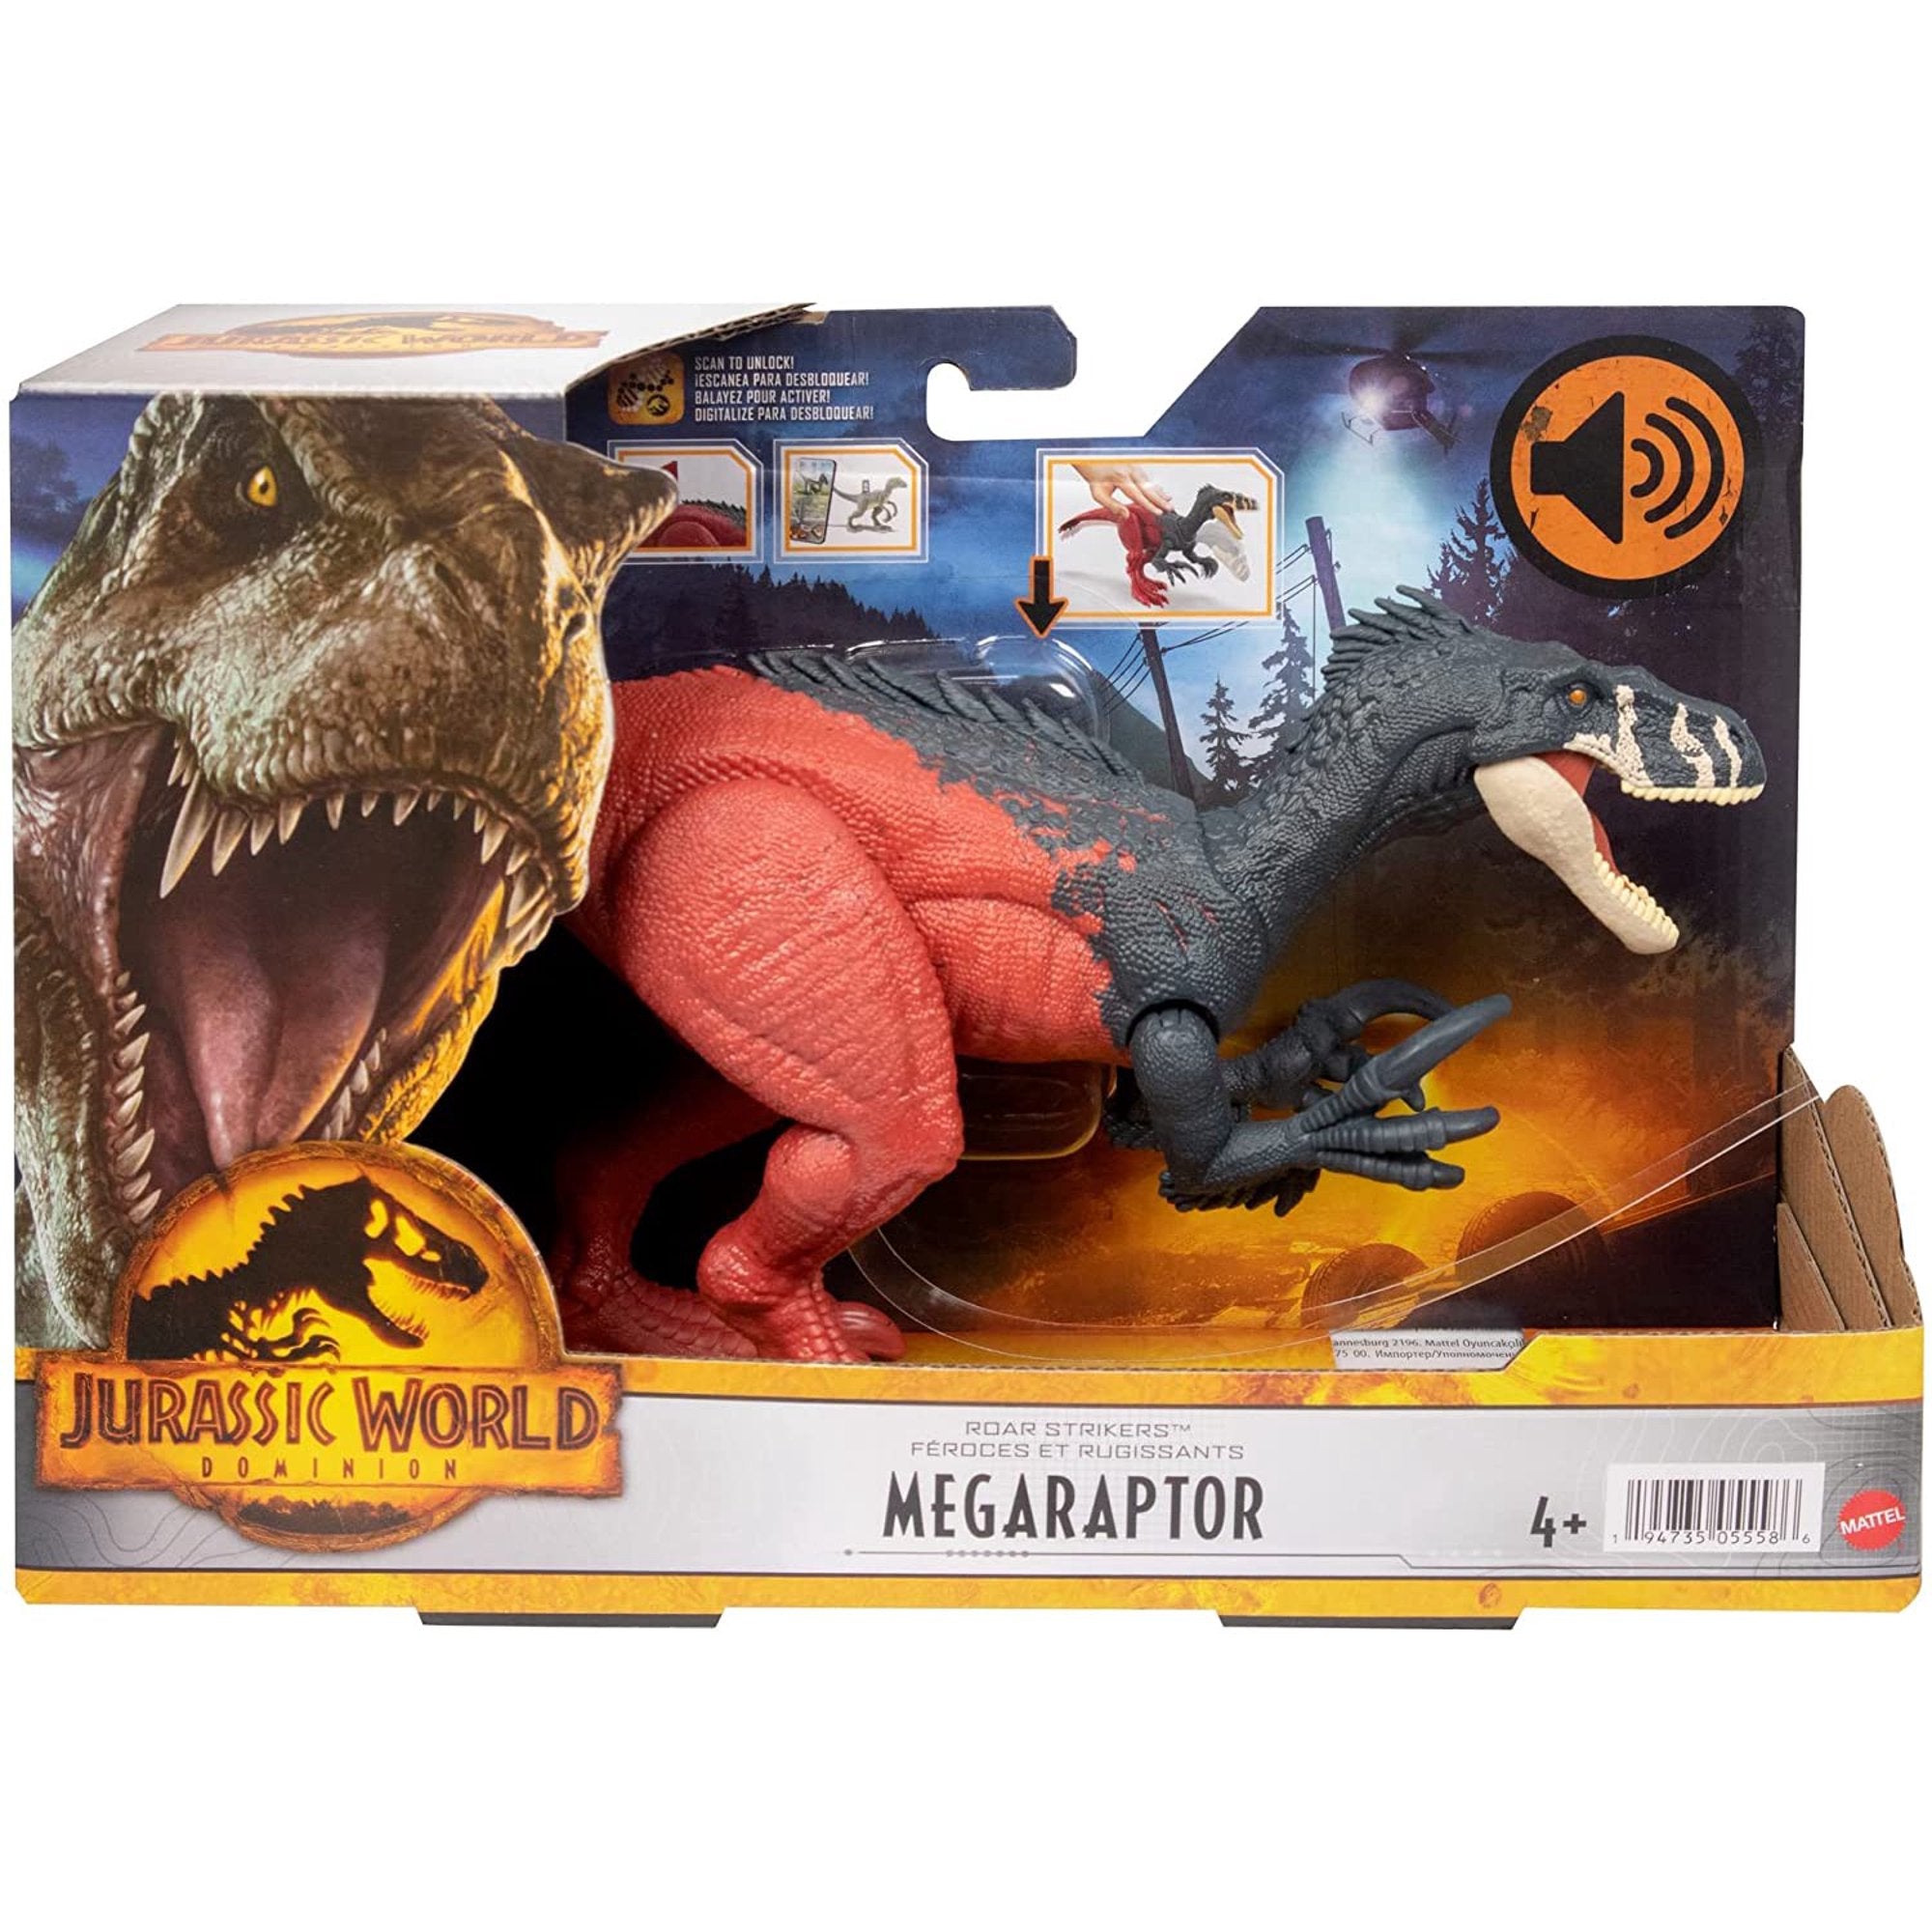 Fisher Price-Jurassic World Roar Strikers-HGP79-Megaraptor-Legacy Toys